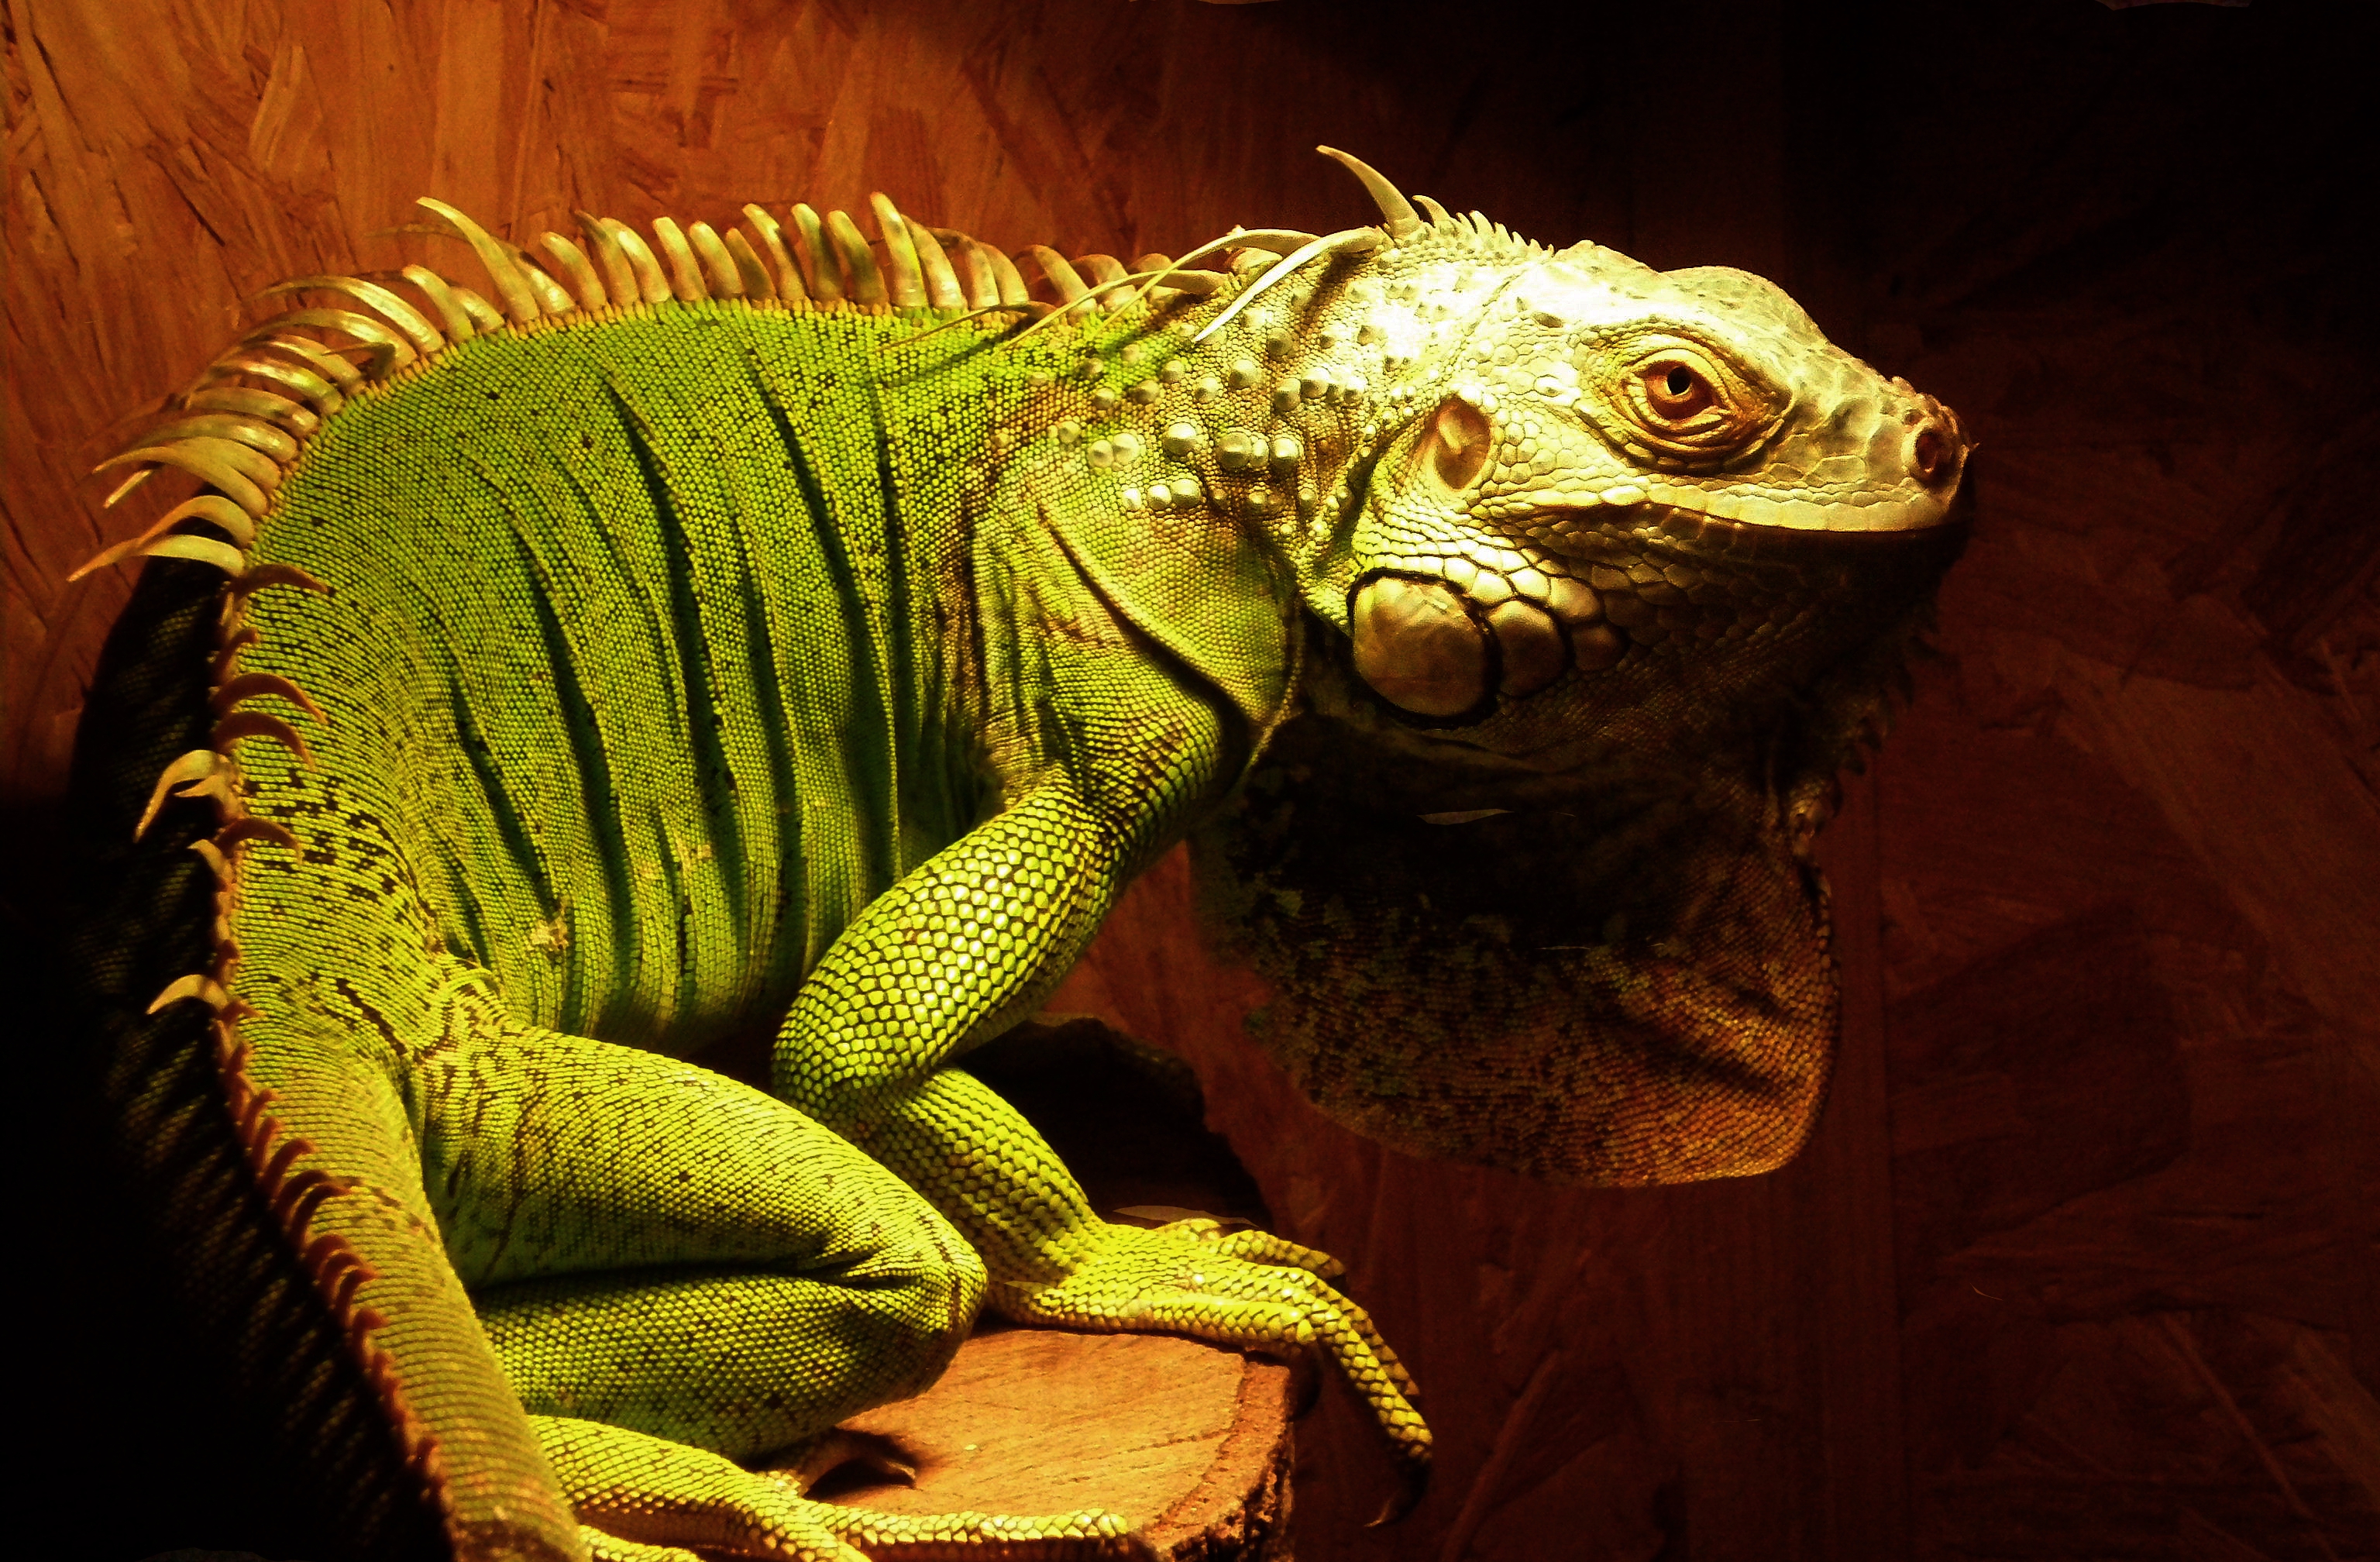 Leo the iguana